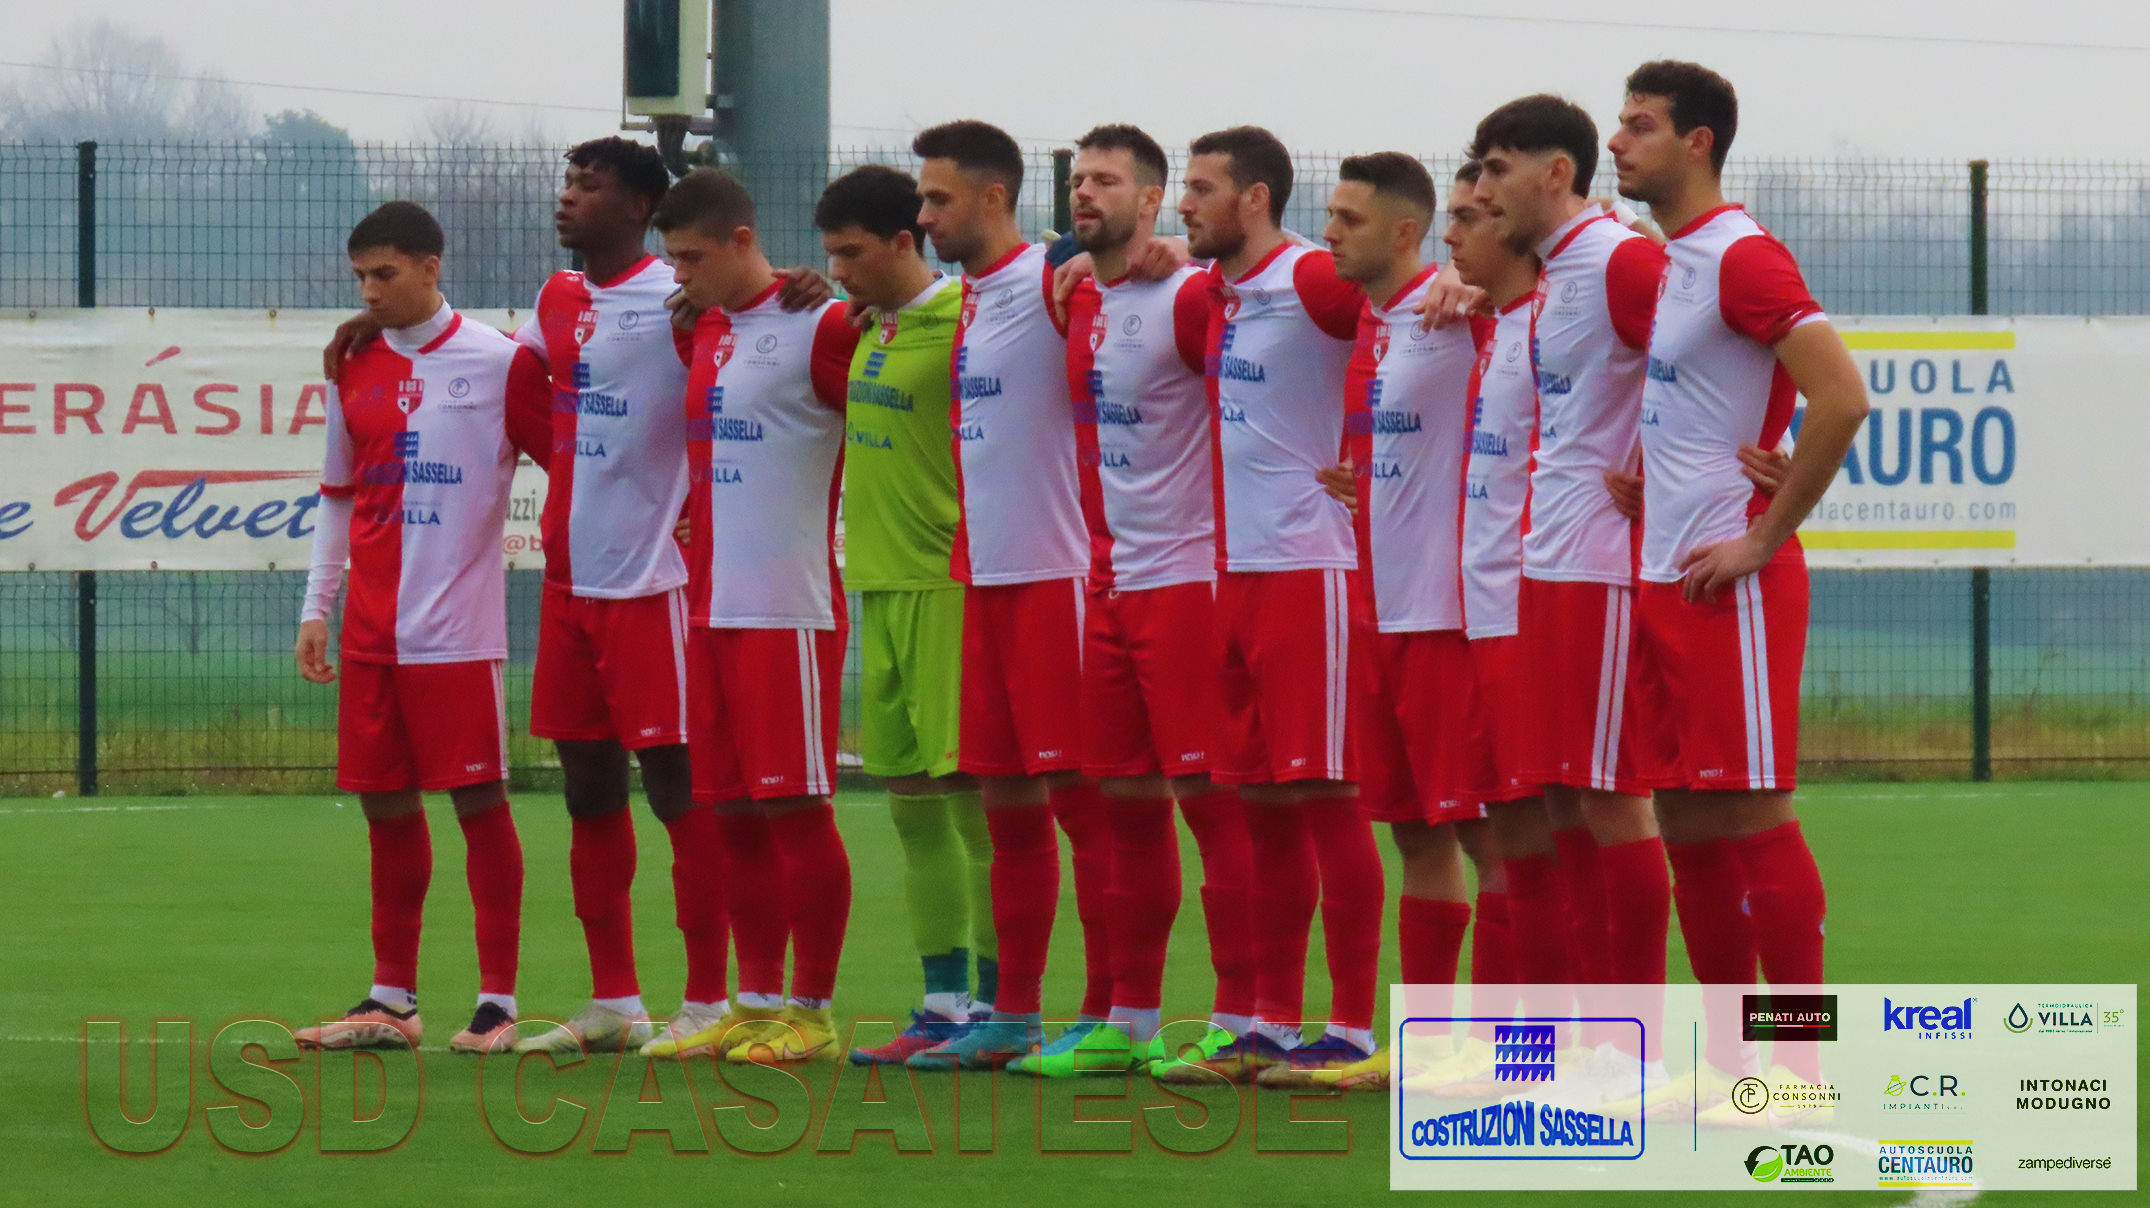 SD Casatese - Calcio Brusaporto 0-2